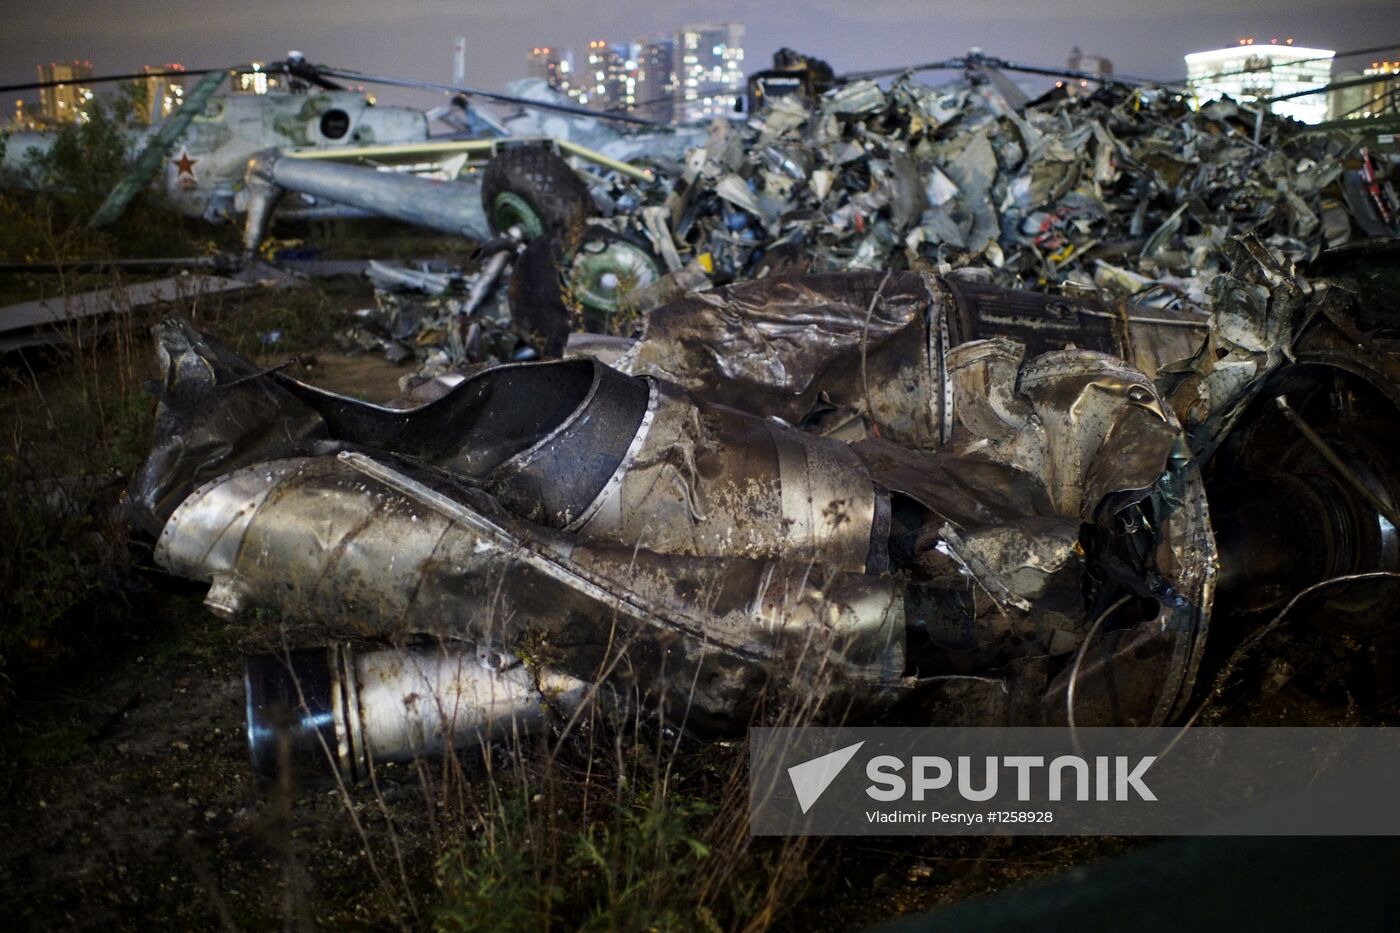 Destroyed aviation equipment at Khodynskoye Pole in Moscow